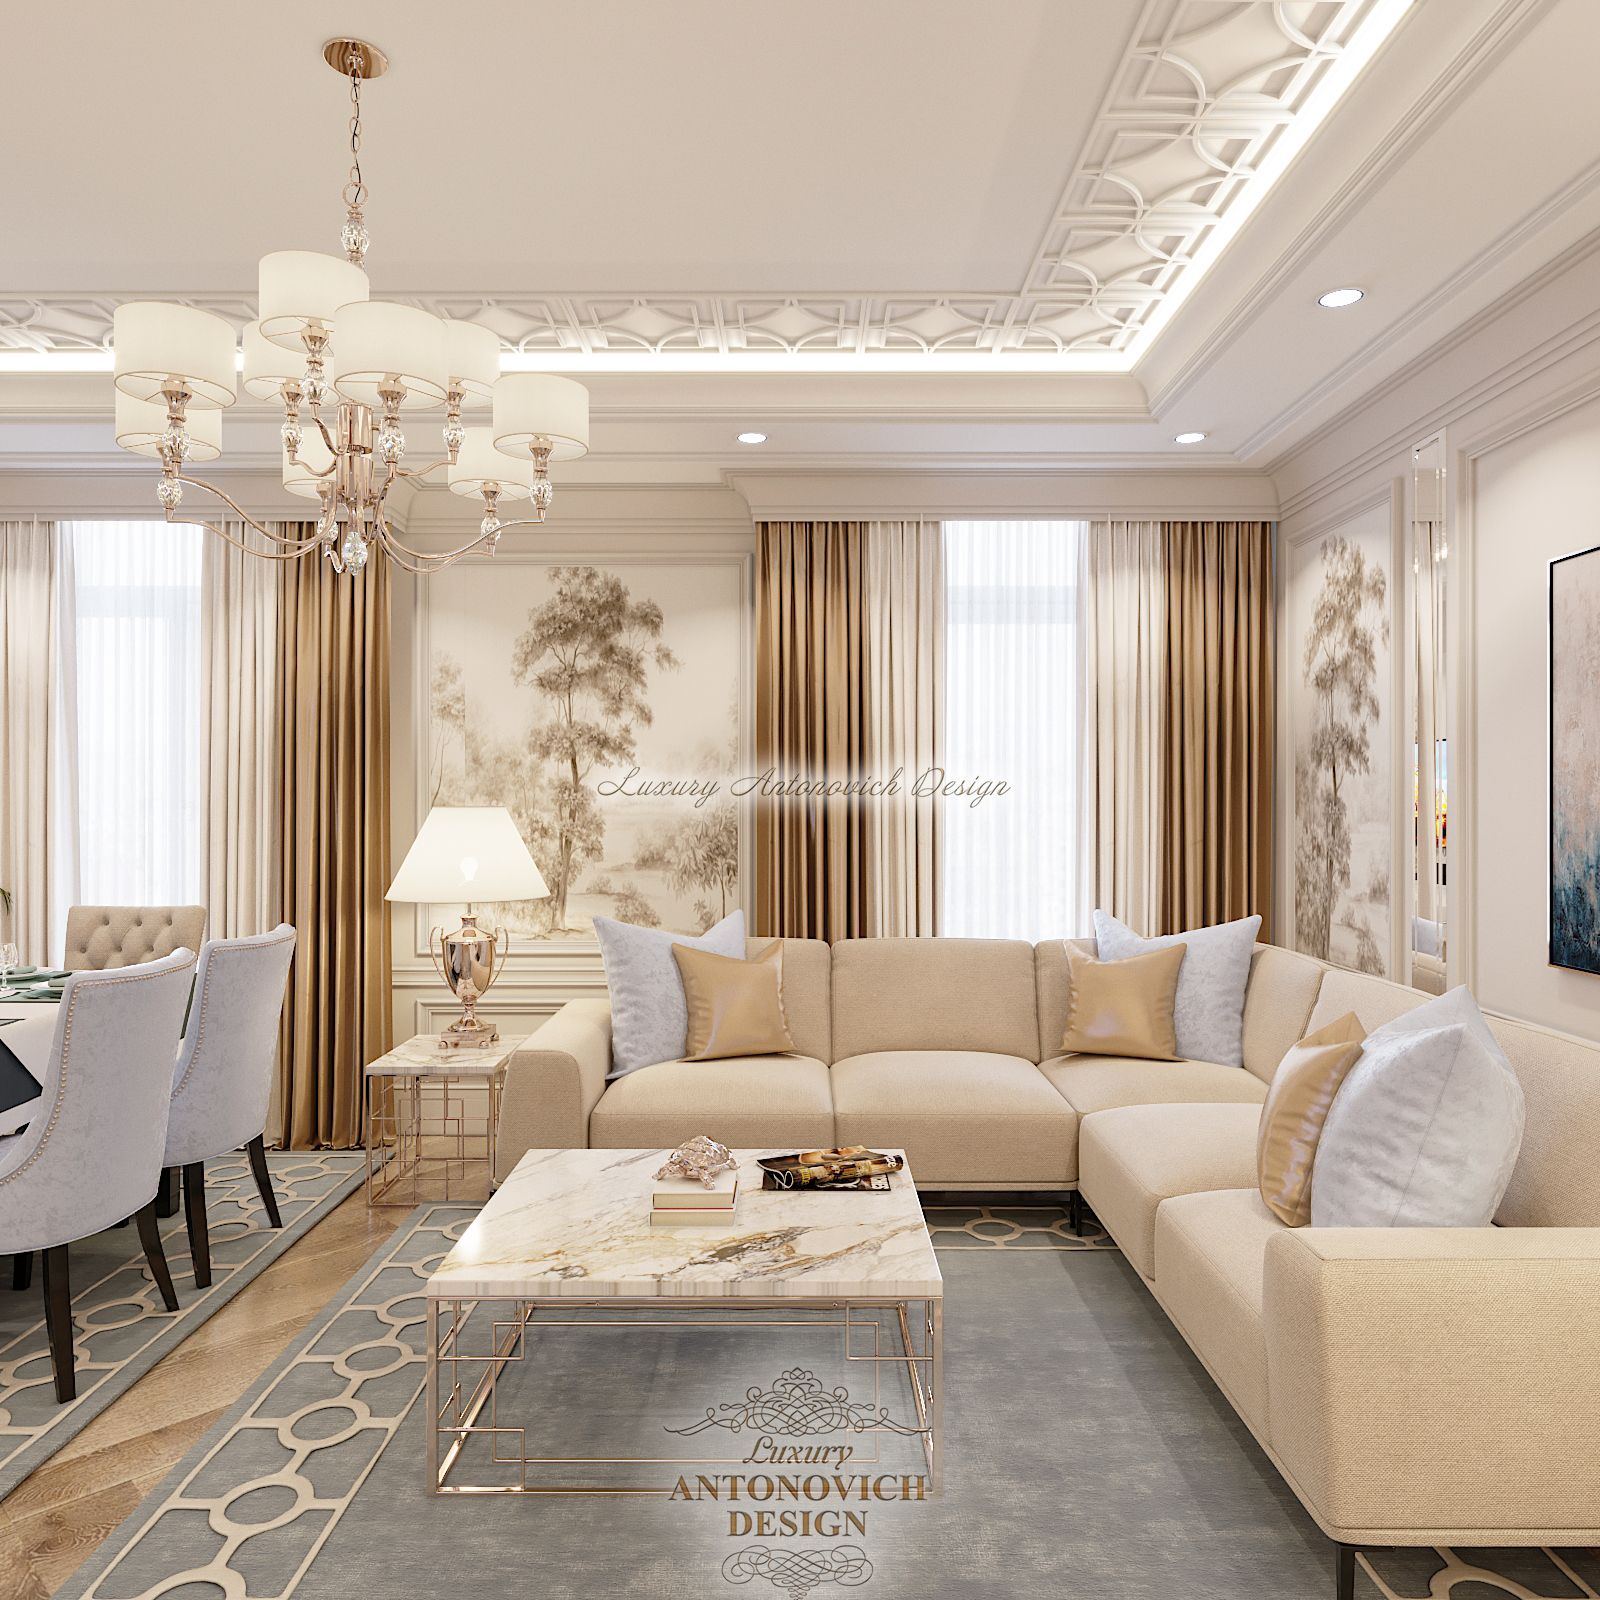 Интерьер гостиной (3), Luxury Antonovich Design